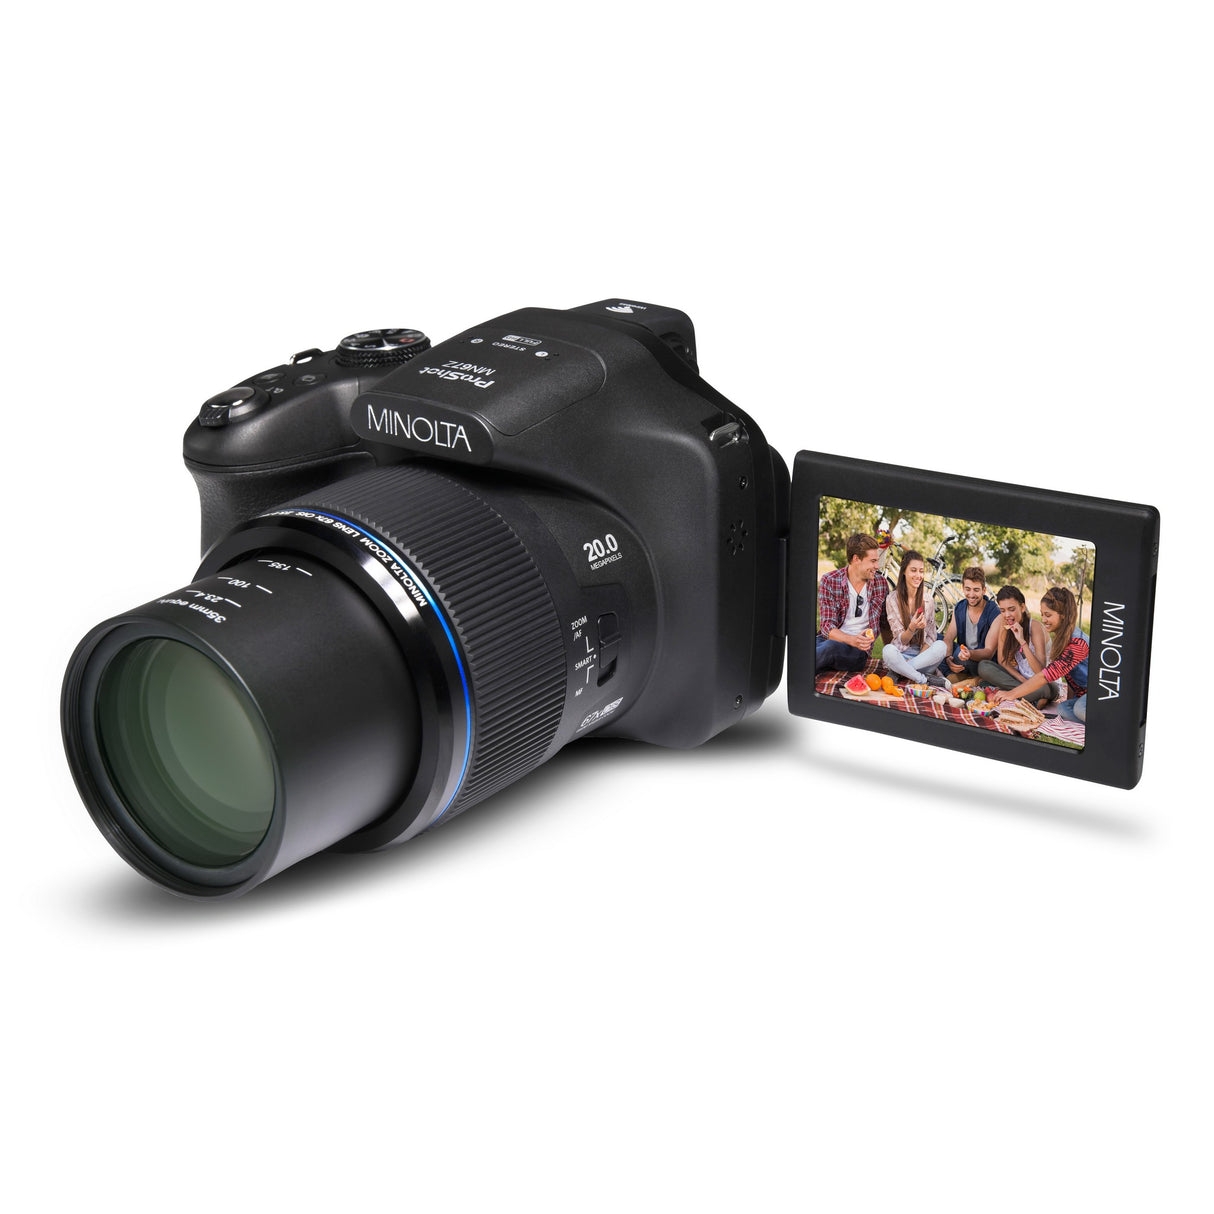 Minolta MN67Z 20 MP 1080p HD Bridge Digital Camera with 67x Optical Zoom, Black